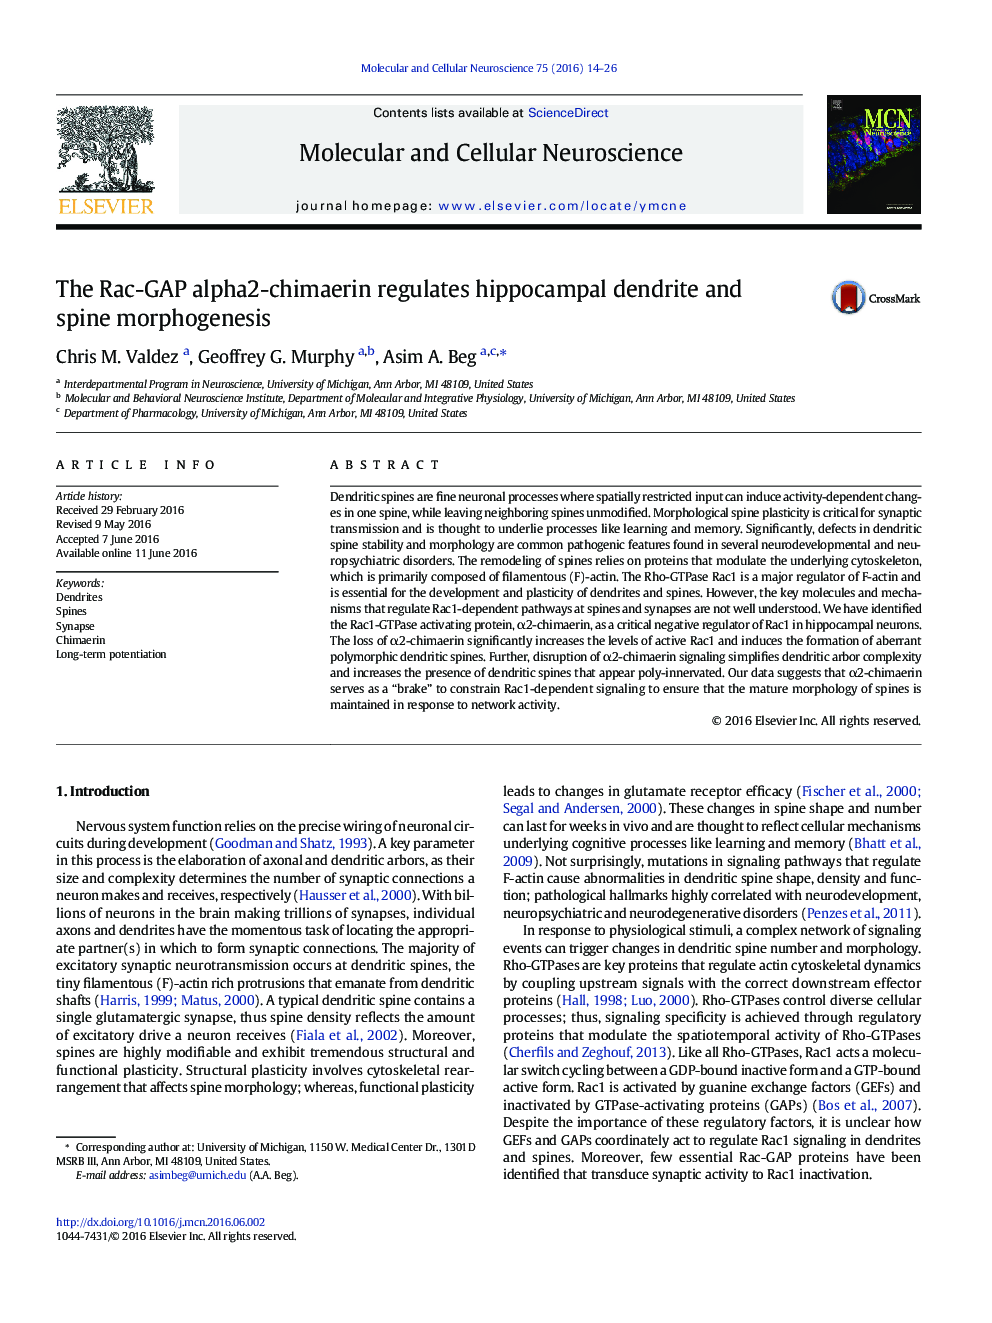 The Rac-GAP alpha2-chimaerin regulates hippocampal dendrite and spine morphogenesis